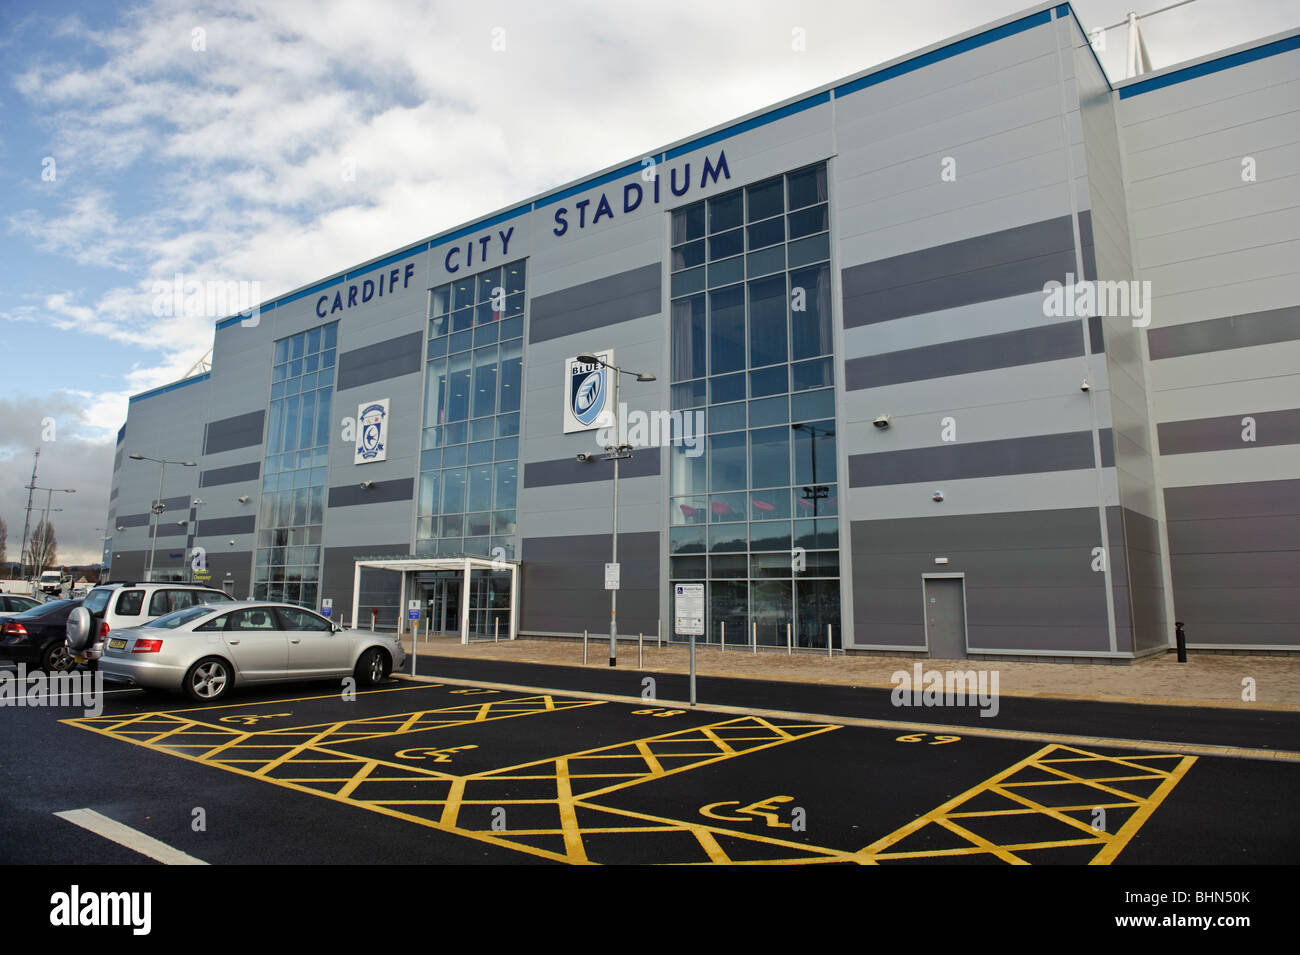 Cardiff City football club nuovo stadio, Cardiff Wales UK Foto Stock